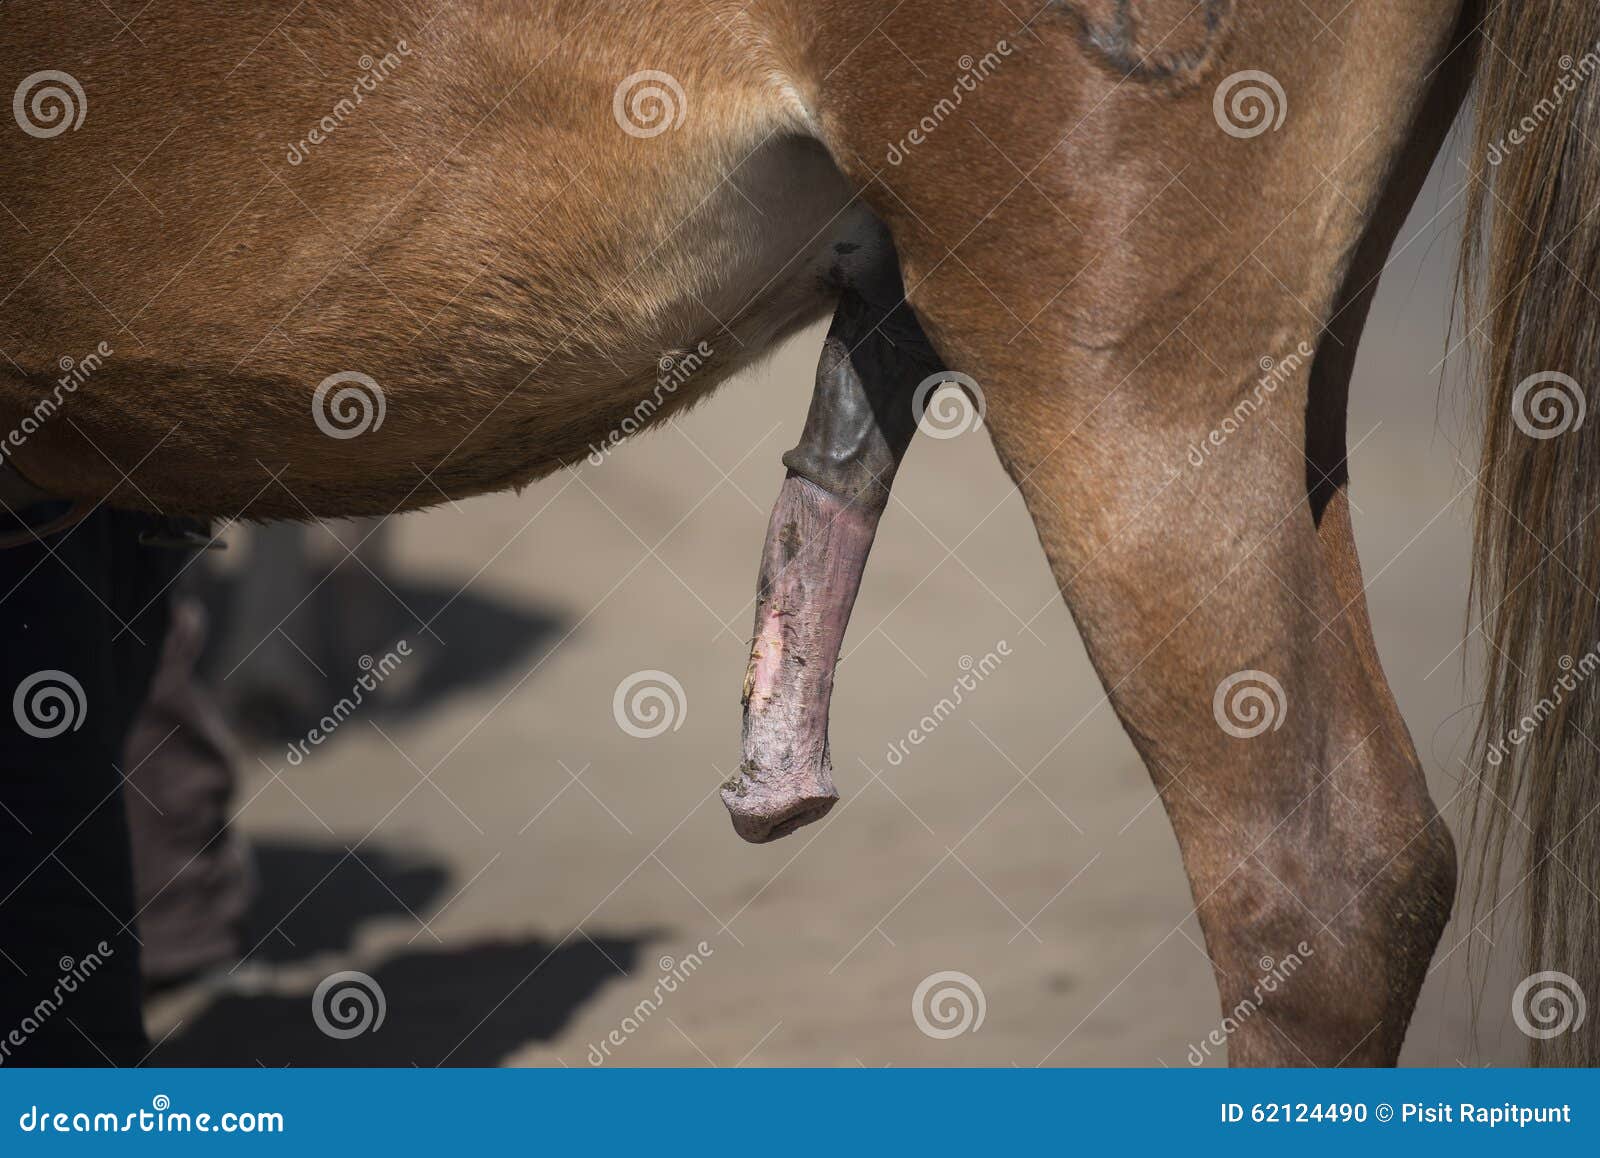 Penis of horse Java ,Indonesia.